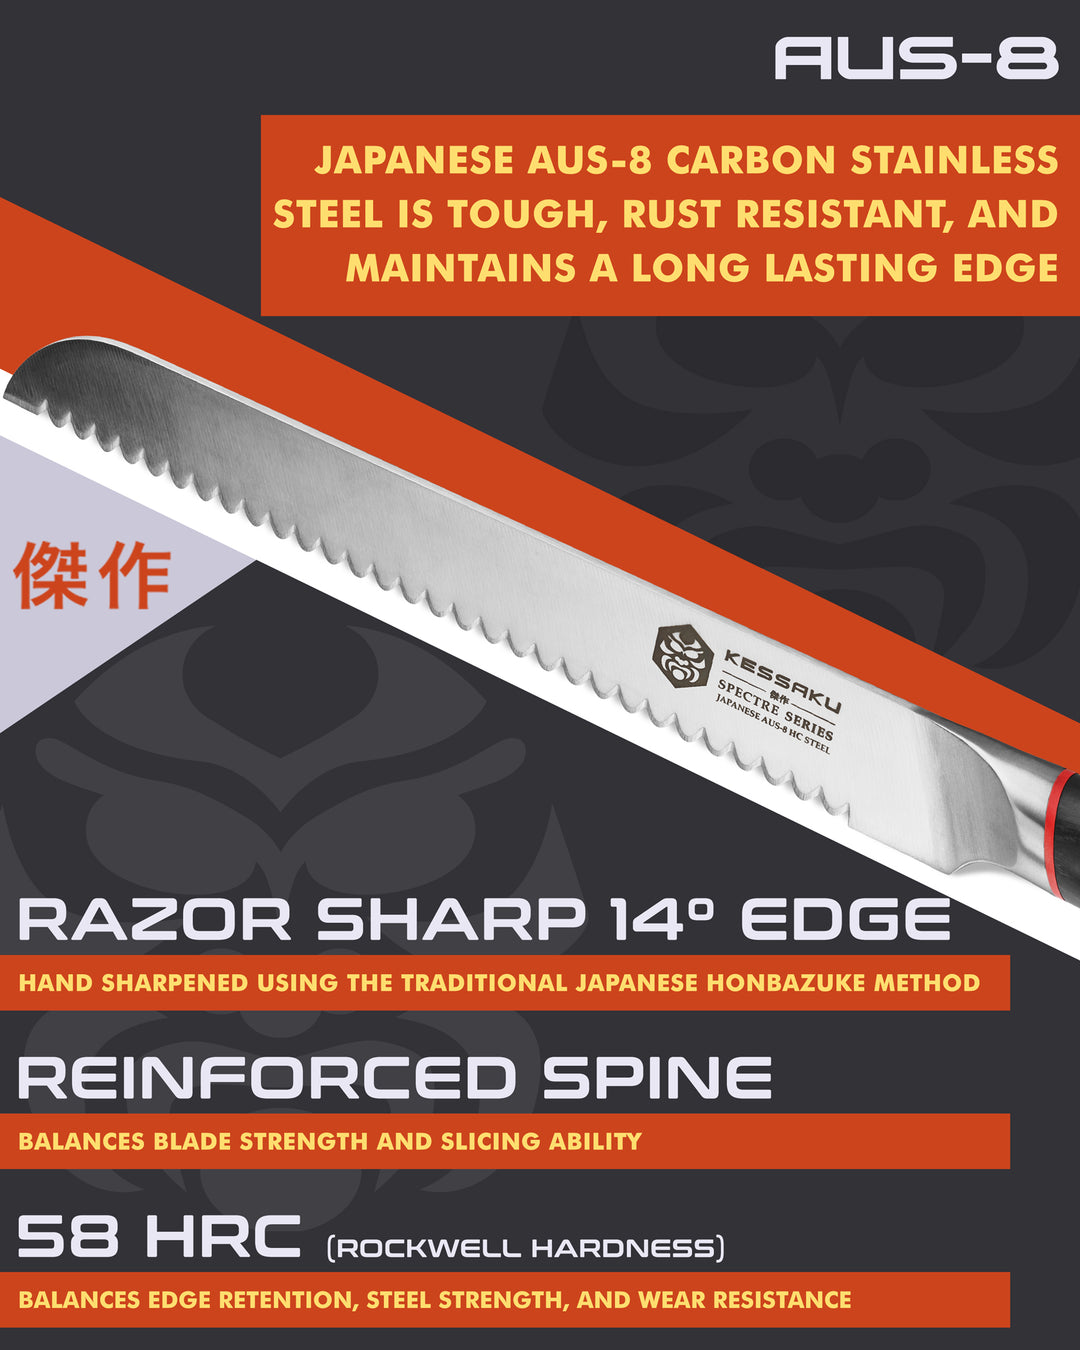 Kessaku Spectre Bread Knife blade features: AUS-8 steel, 58 HRC, 14 degree edge, reinforced spine